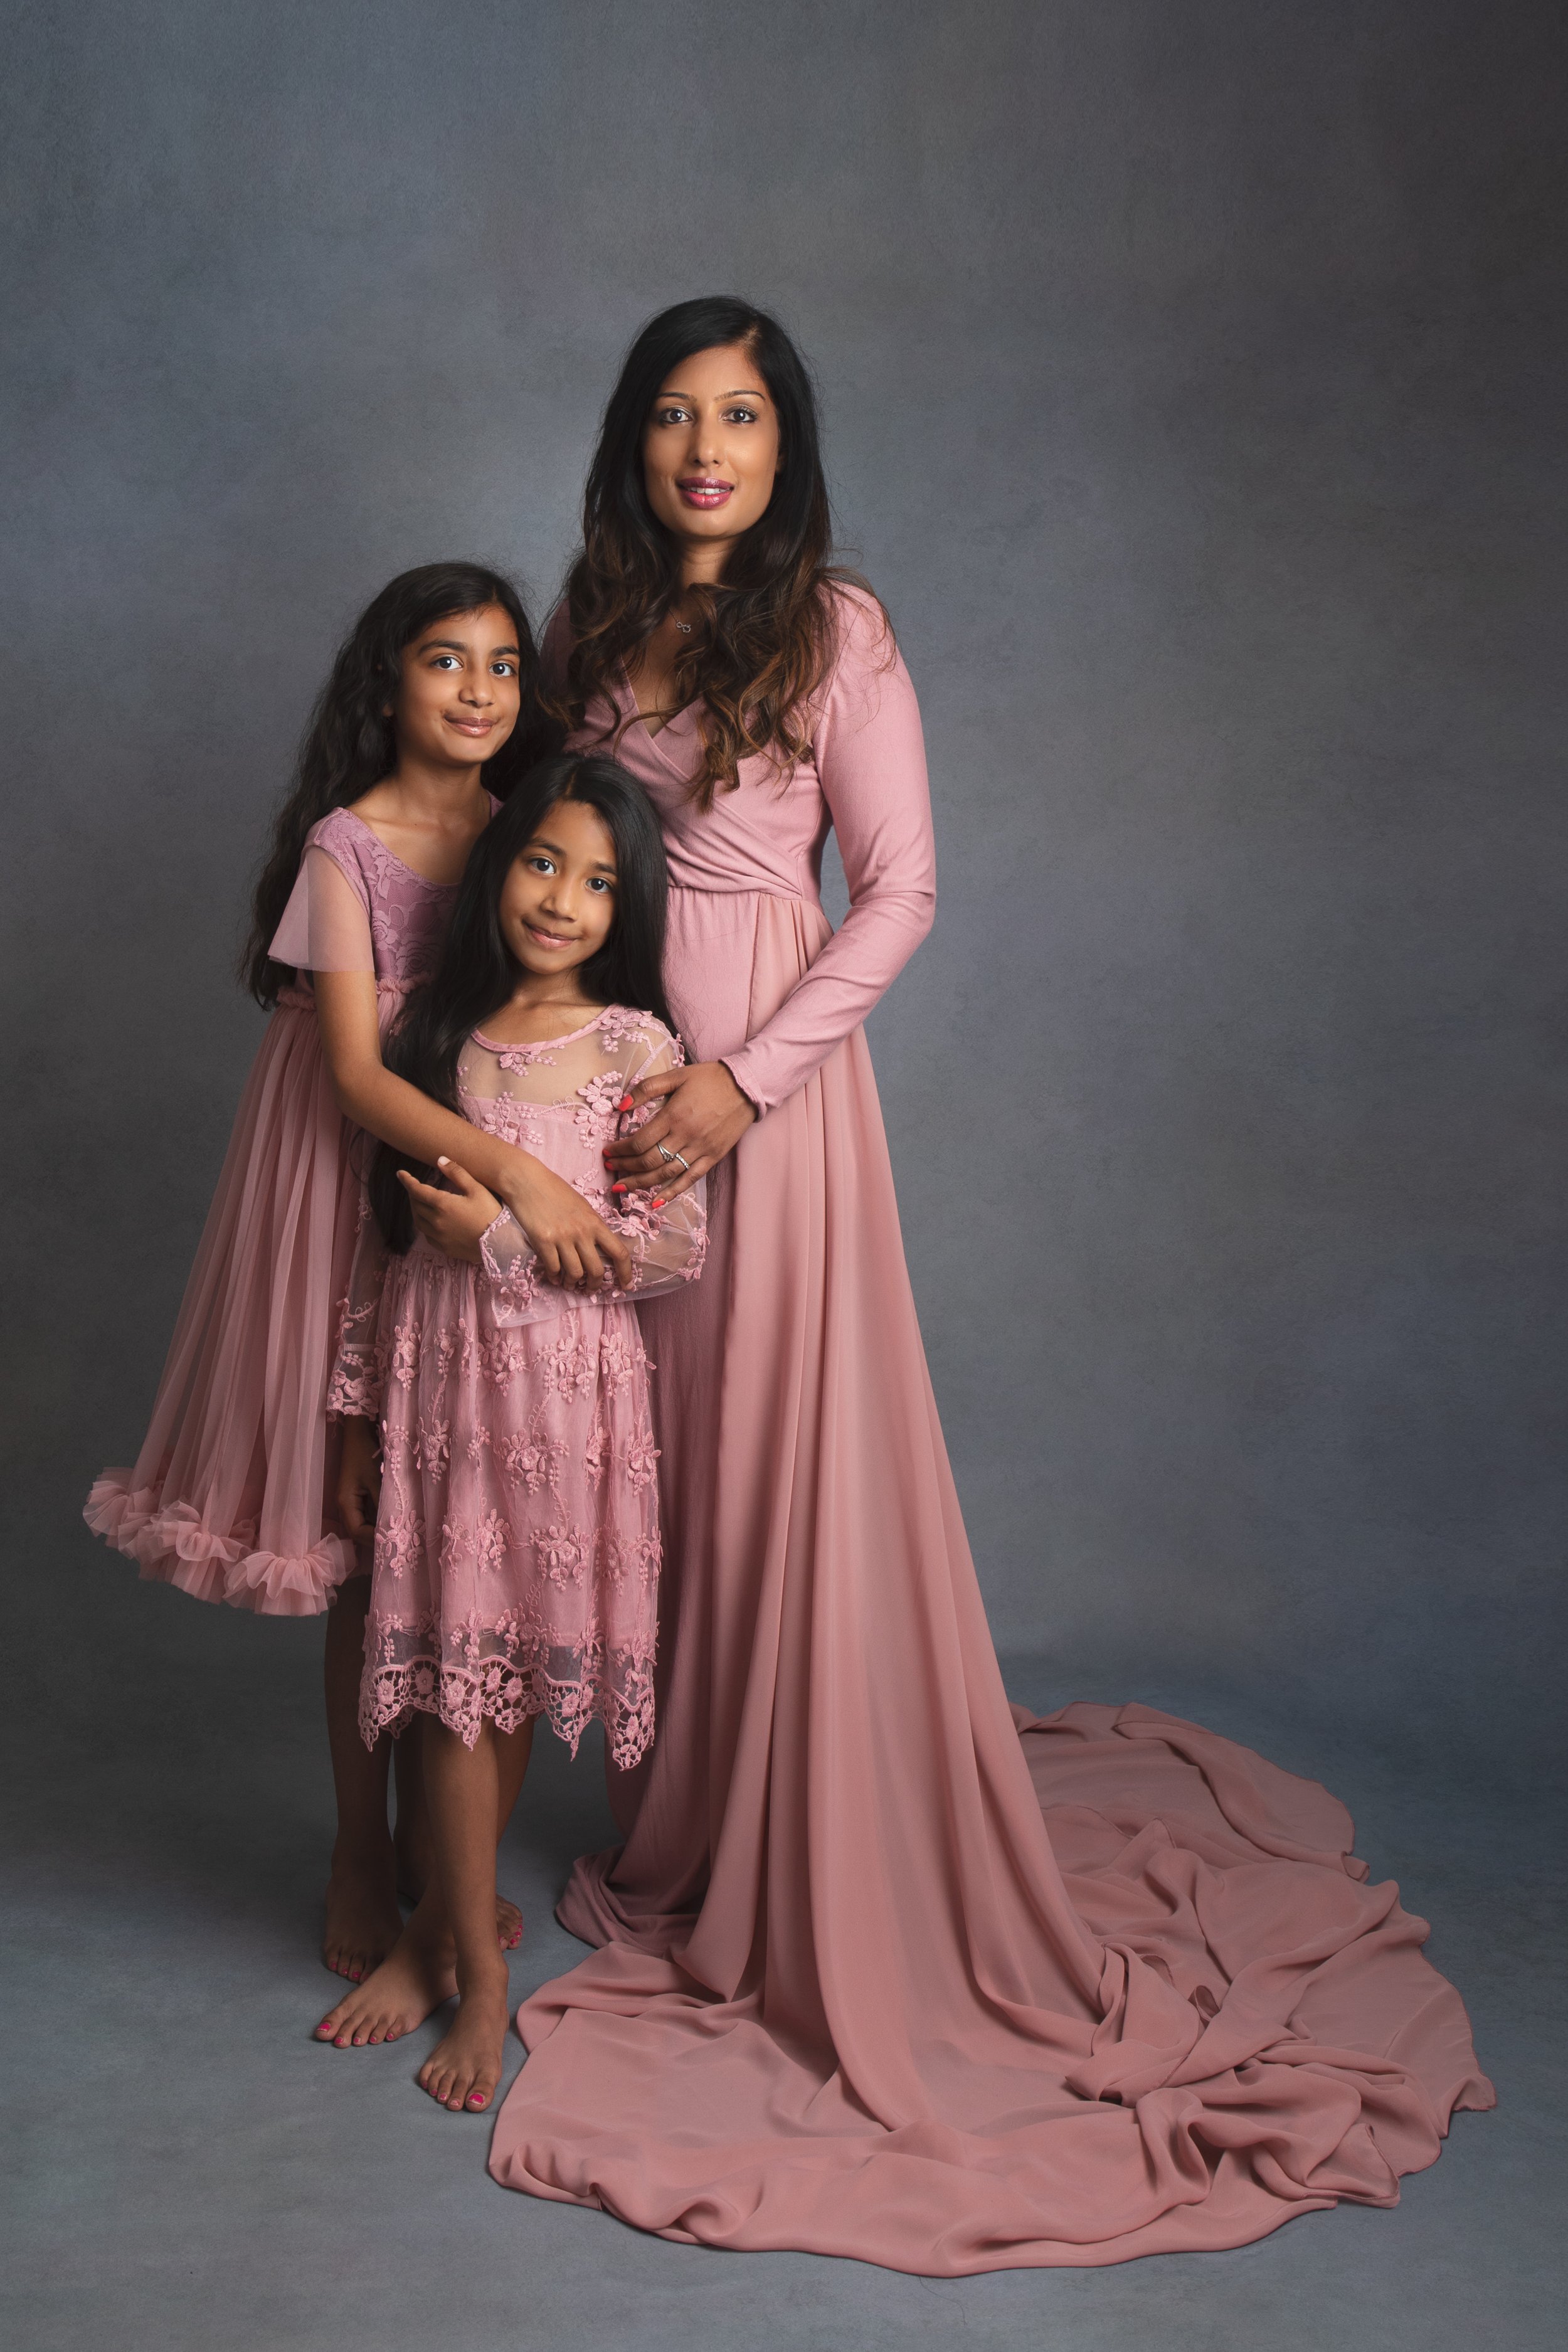  Mum and two daughters wearing pink dresses posing in MK studio 